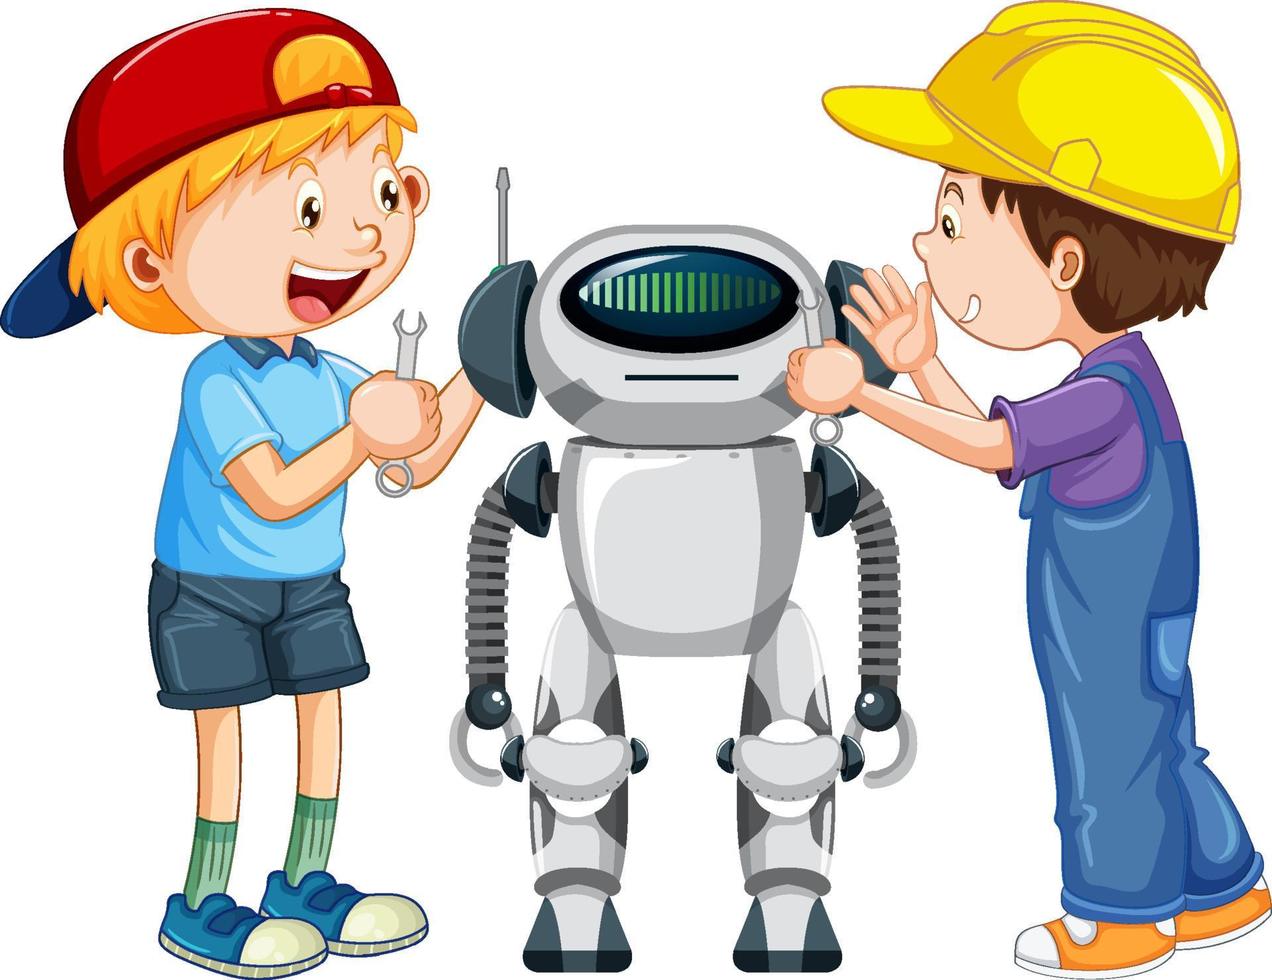 två pojkar som bygger robot på vit bakgrund vektor